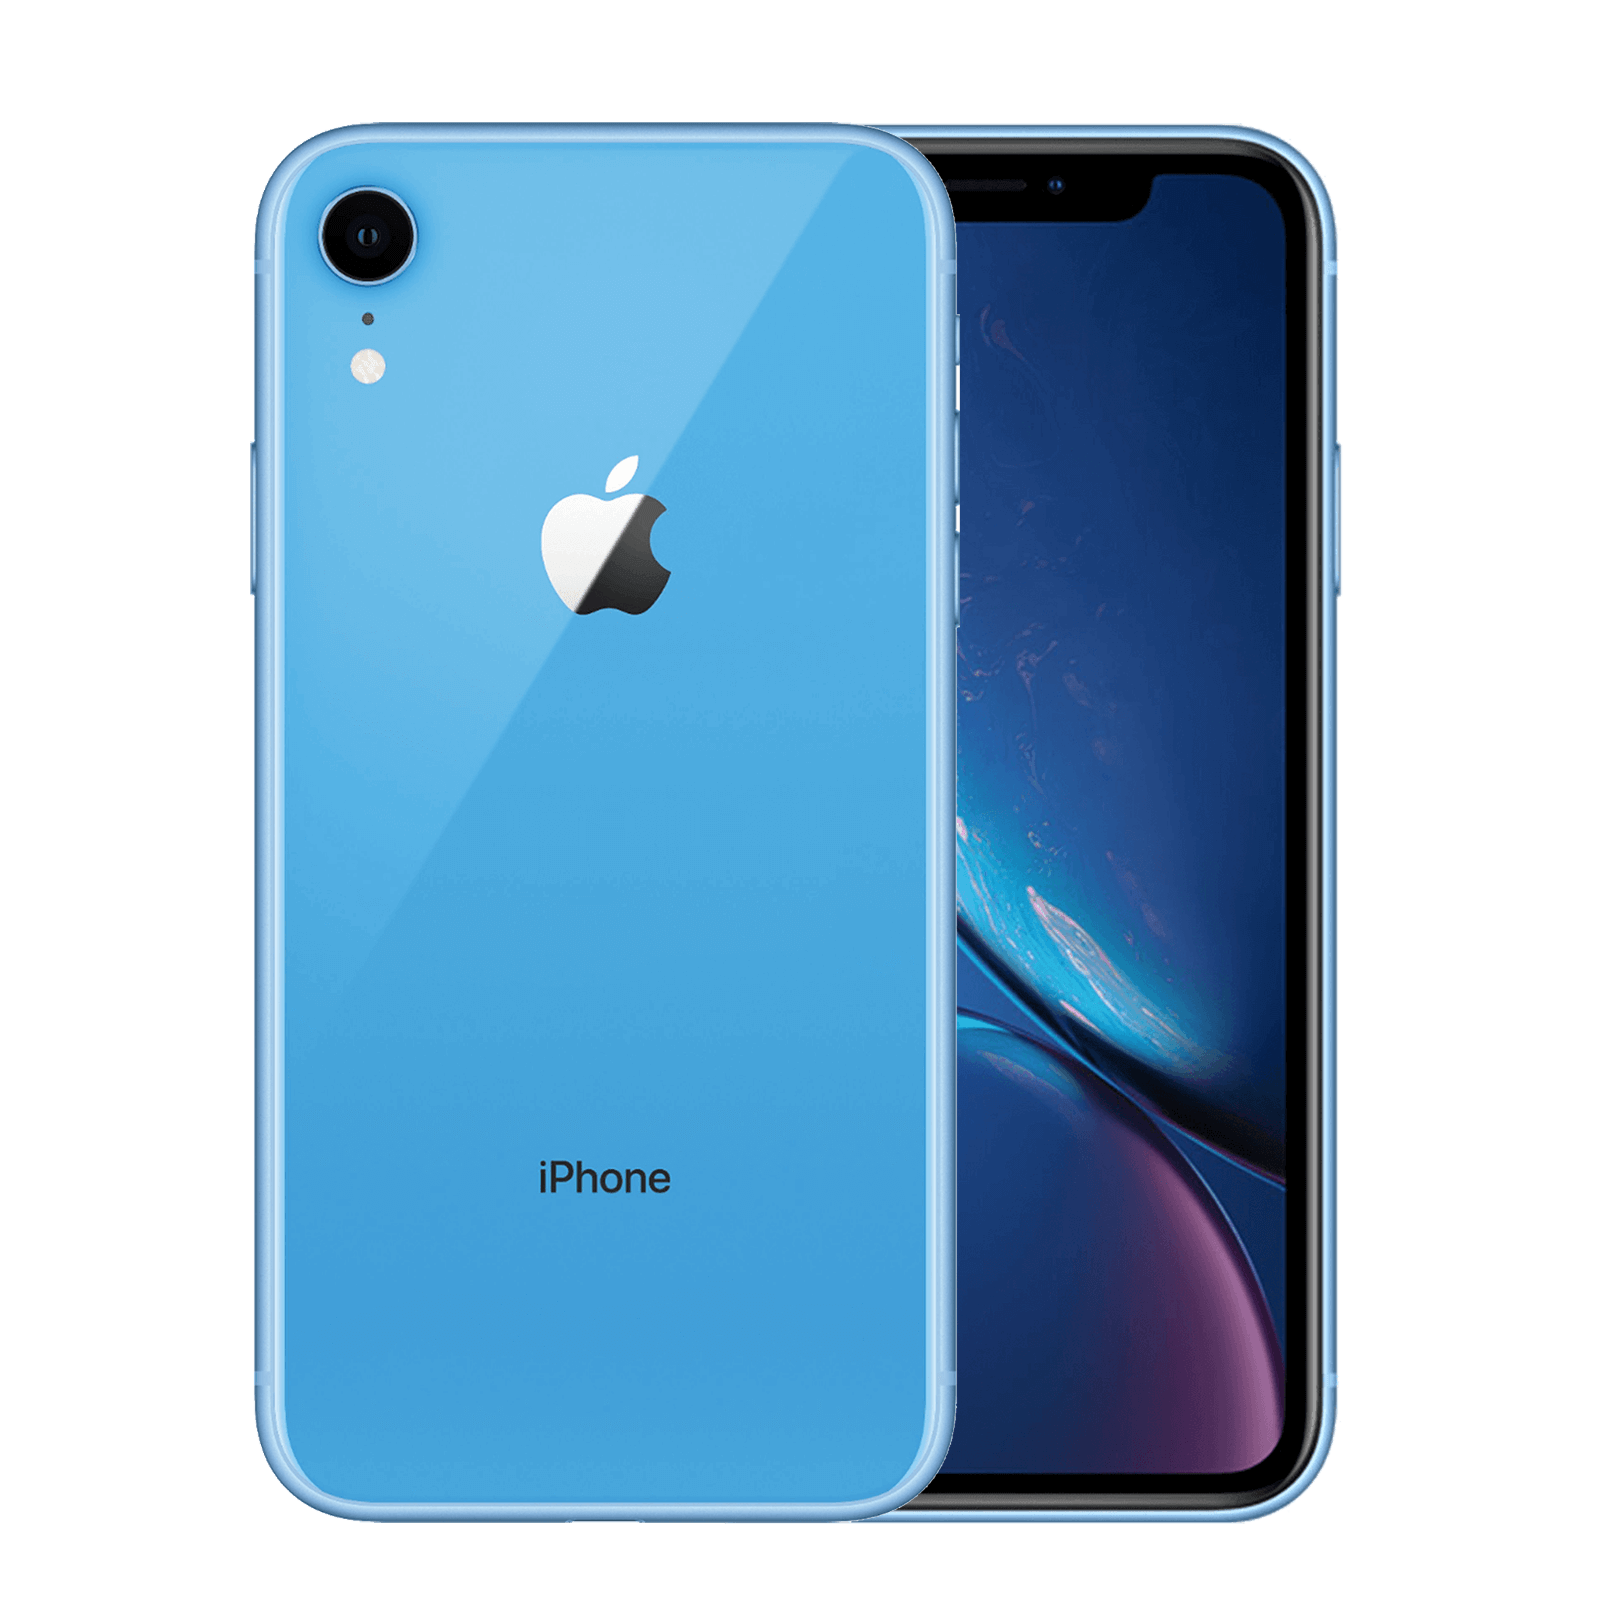 Apple iPhone XR 64GB Blue Pristine - Unlocked